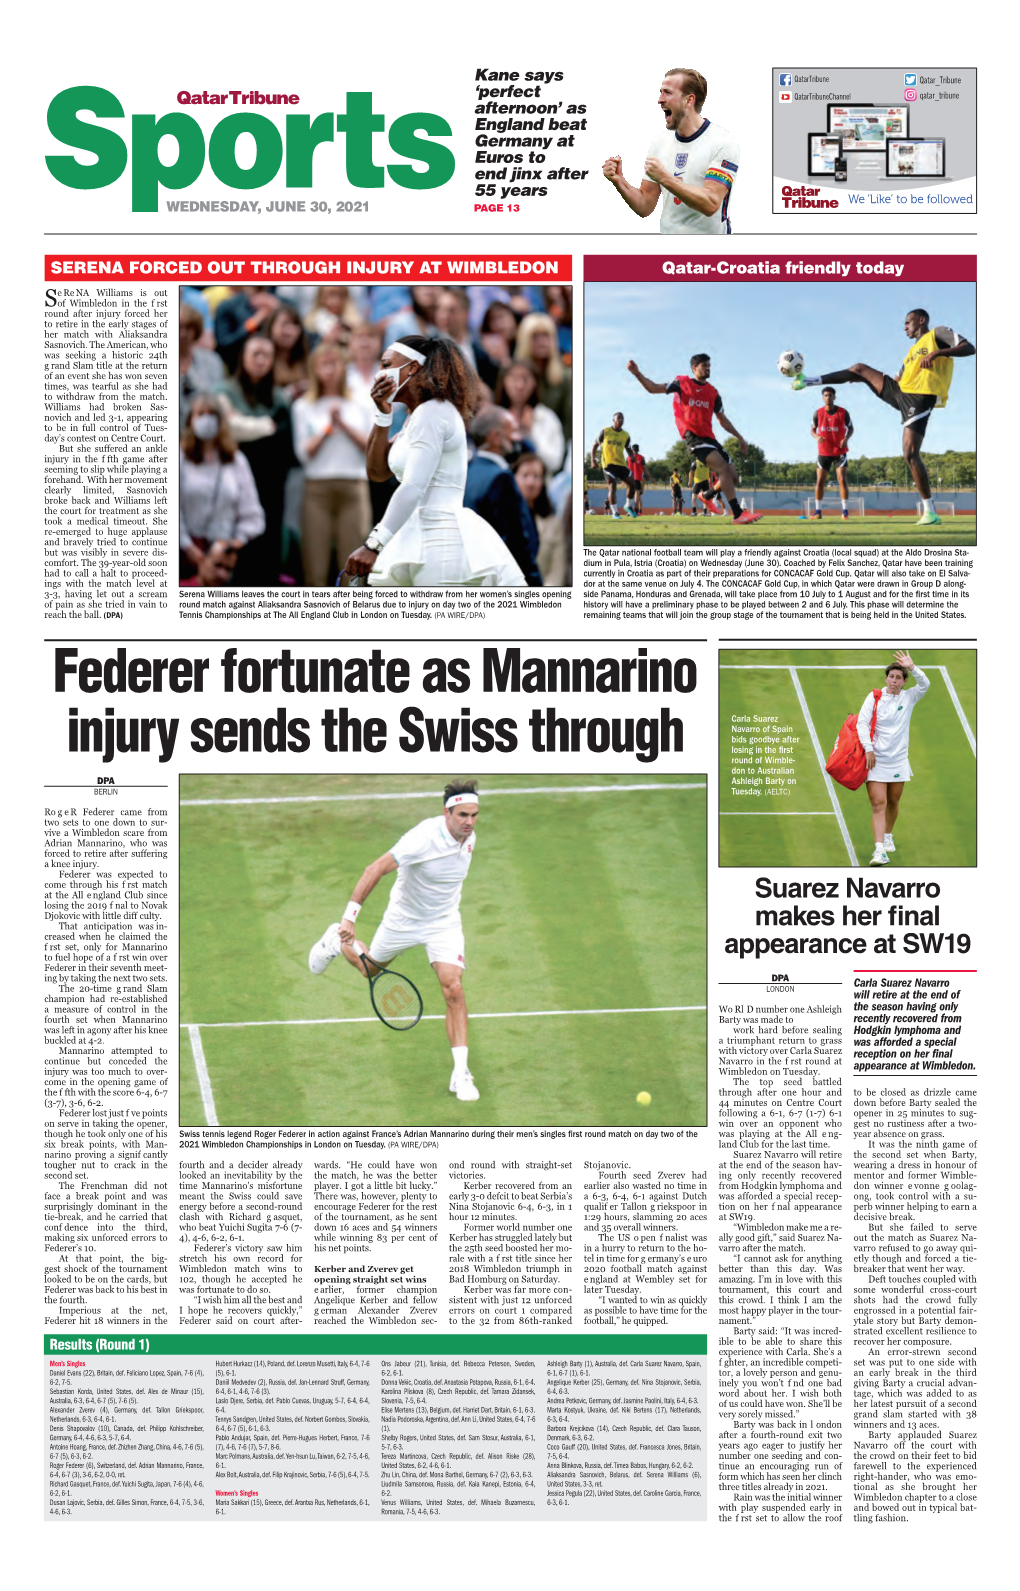 Federer Fortunate As Mannarino Injury Sends the Swiss Through